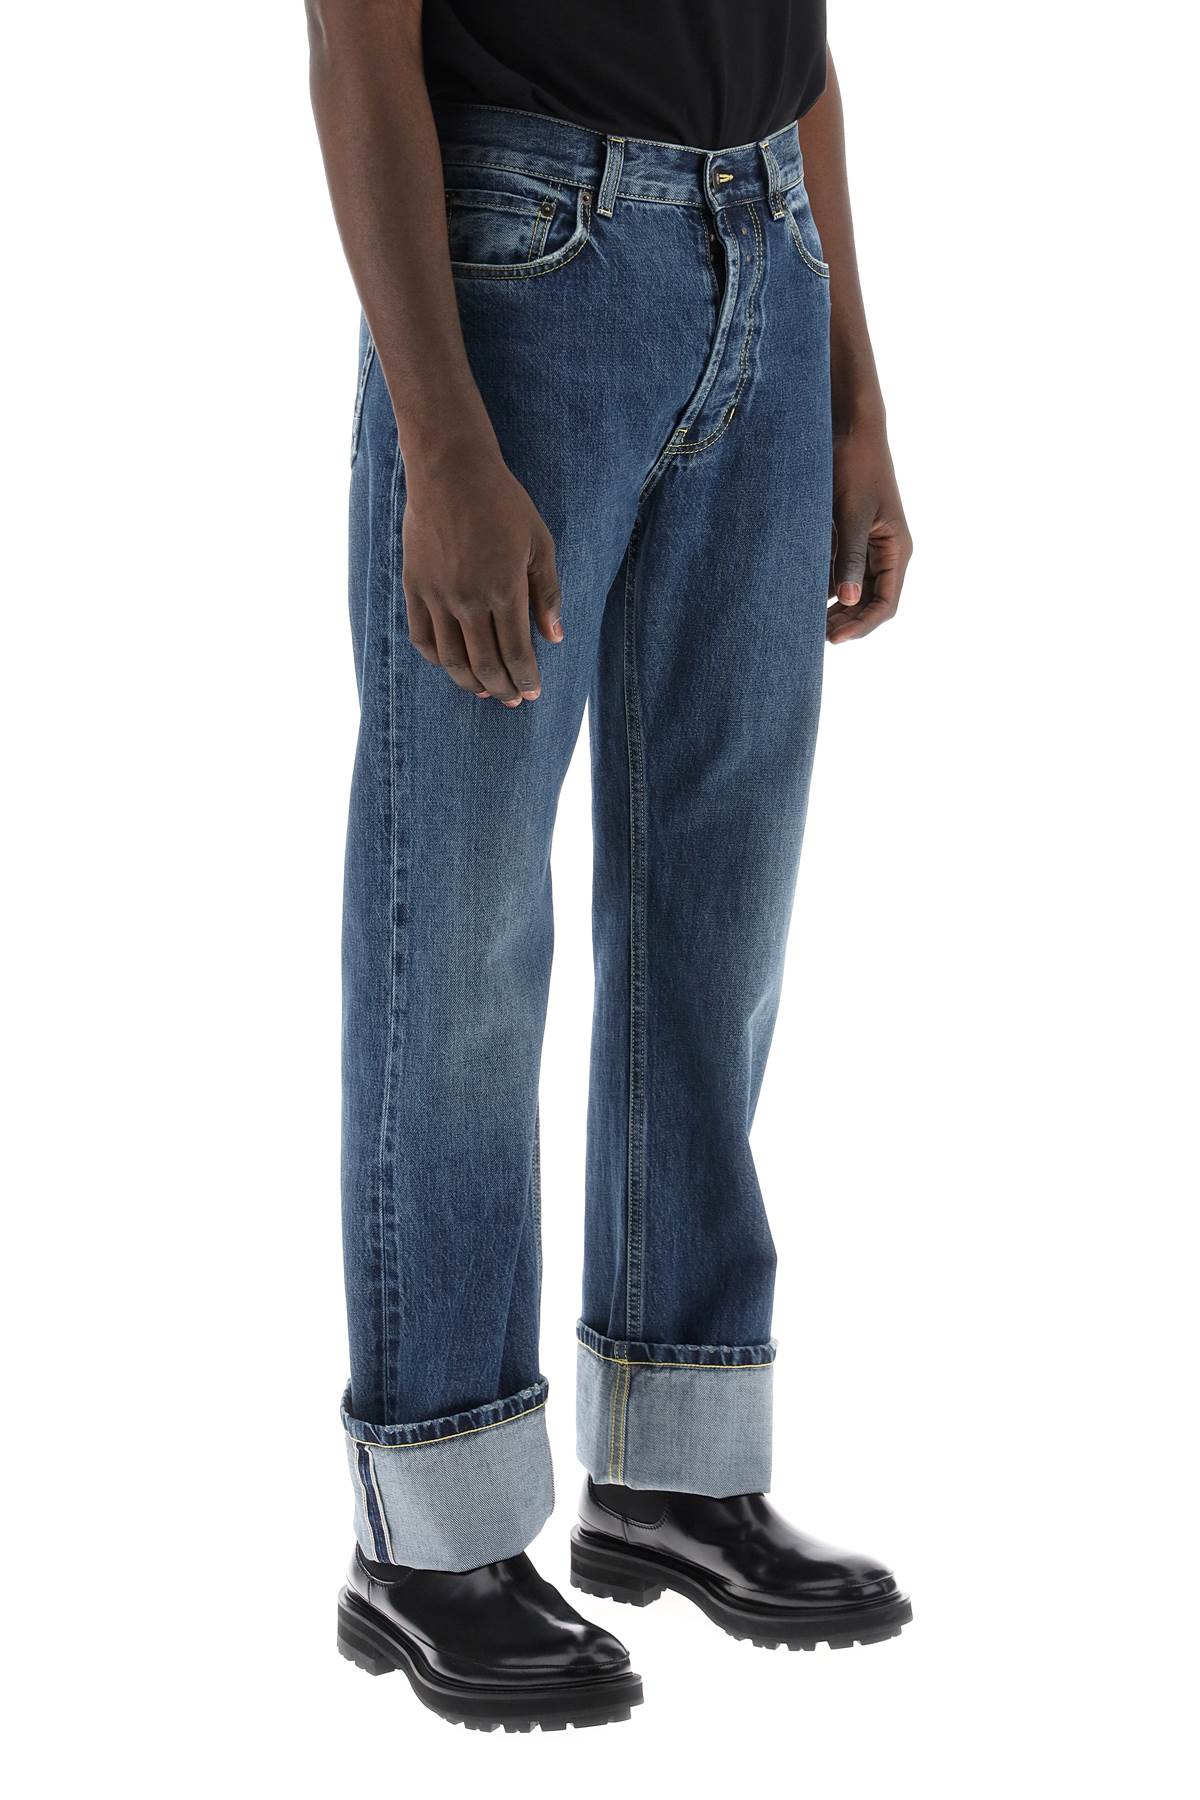 Alexander mcqueen straight fit jeans in selvedge denim-1